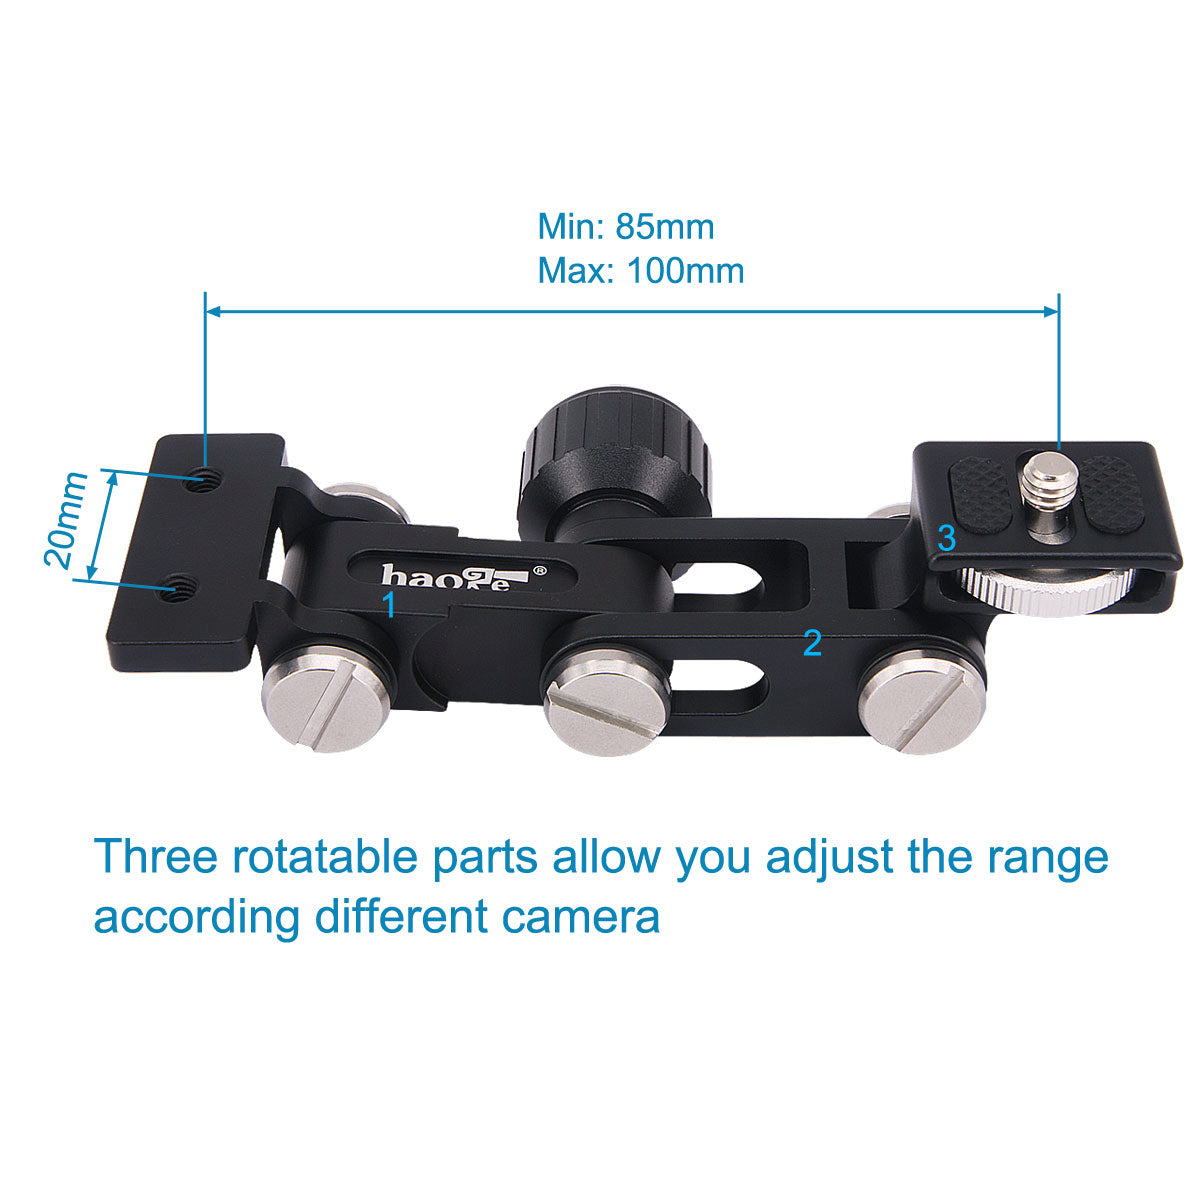 Haoge TJ-06 Camera Support Bracket Holder for DIY Camera Lens Support System with Haoge Plates